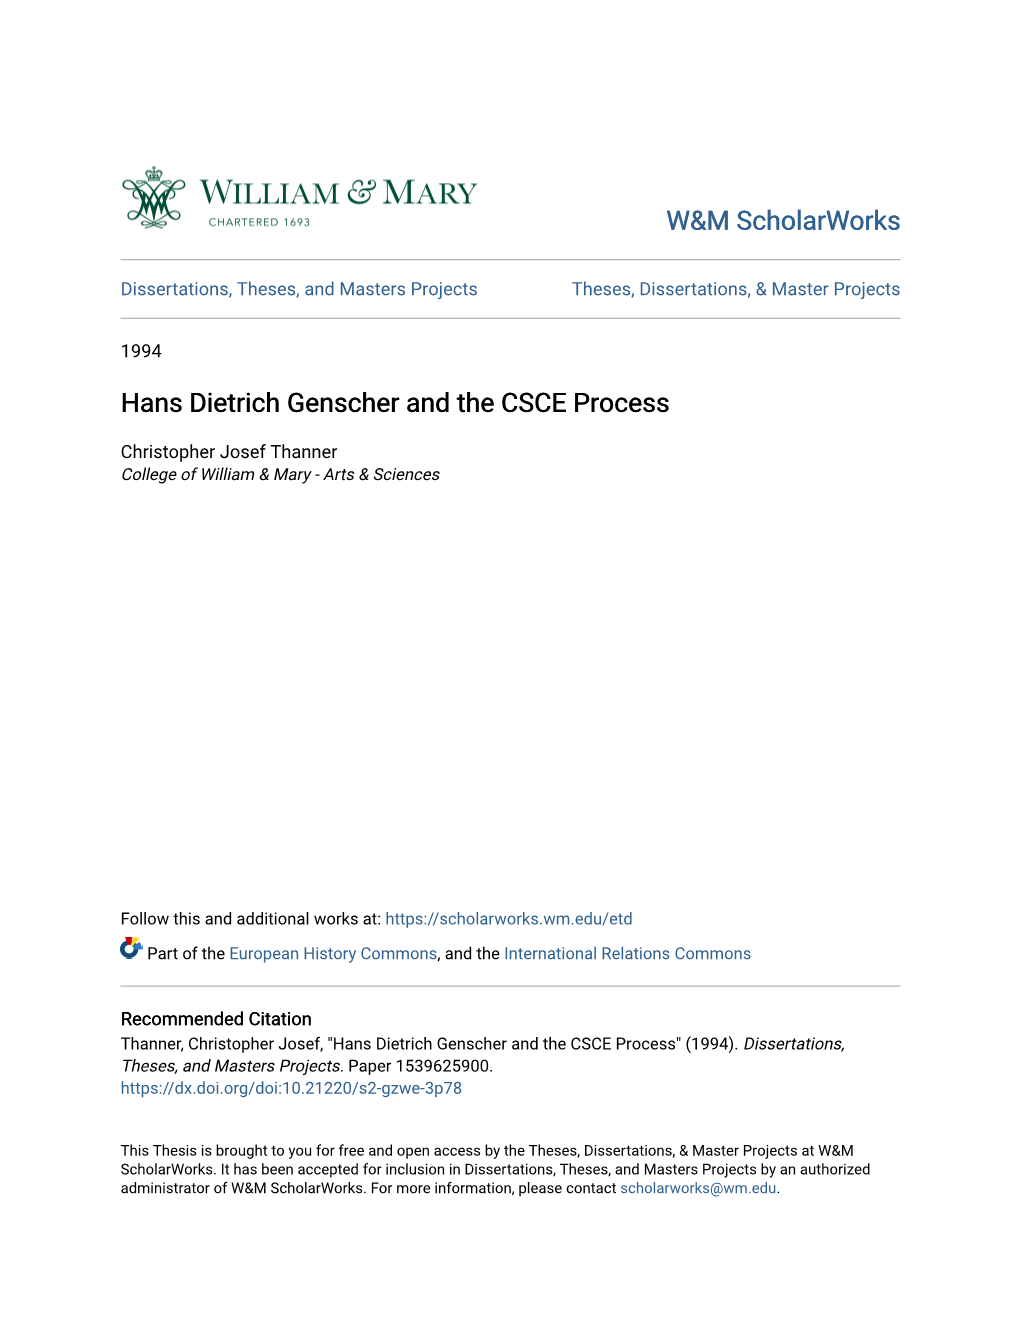 Hans Dietrich Genscher and the CSCE Process